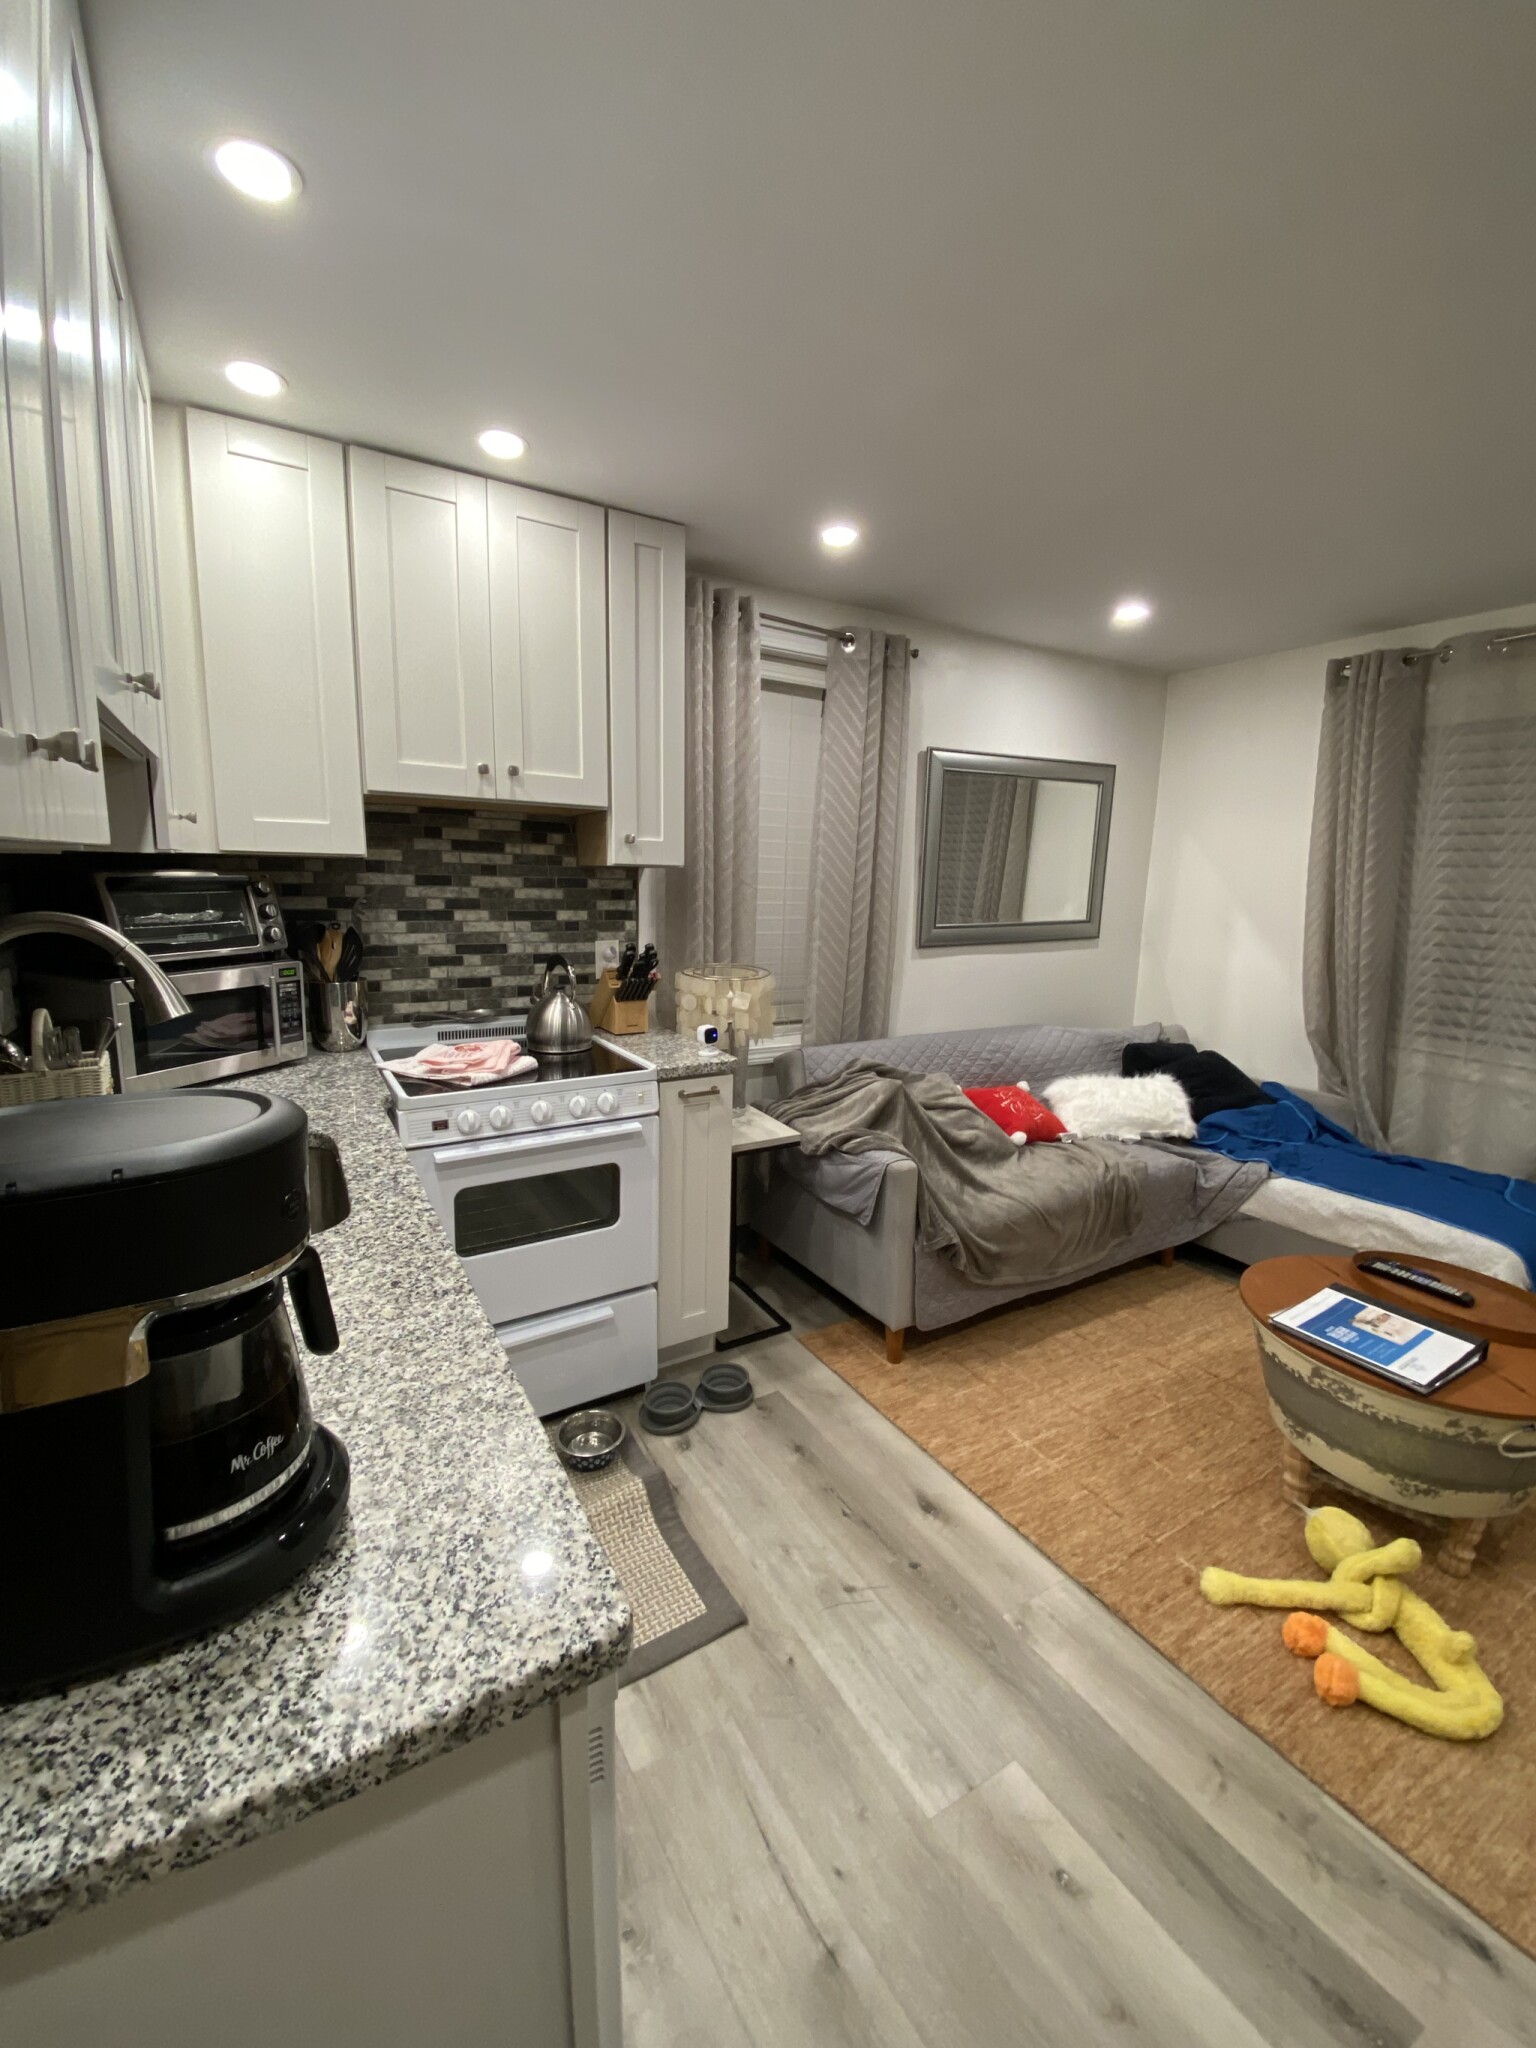 Photos of apartment on Boylston St.,Brookline MA 02446